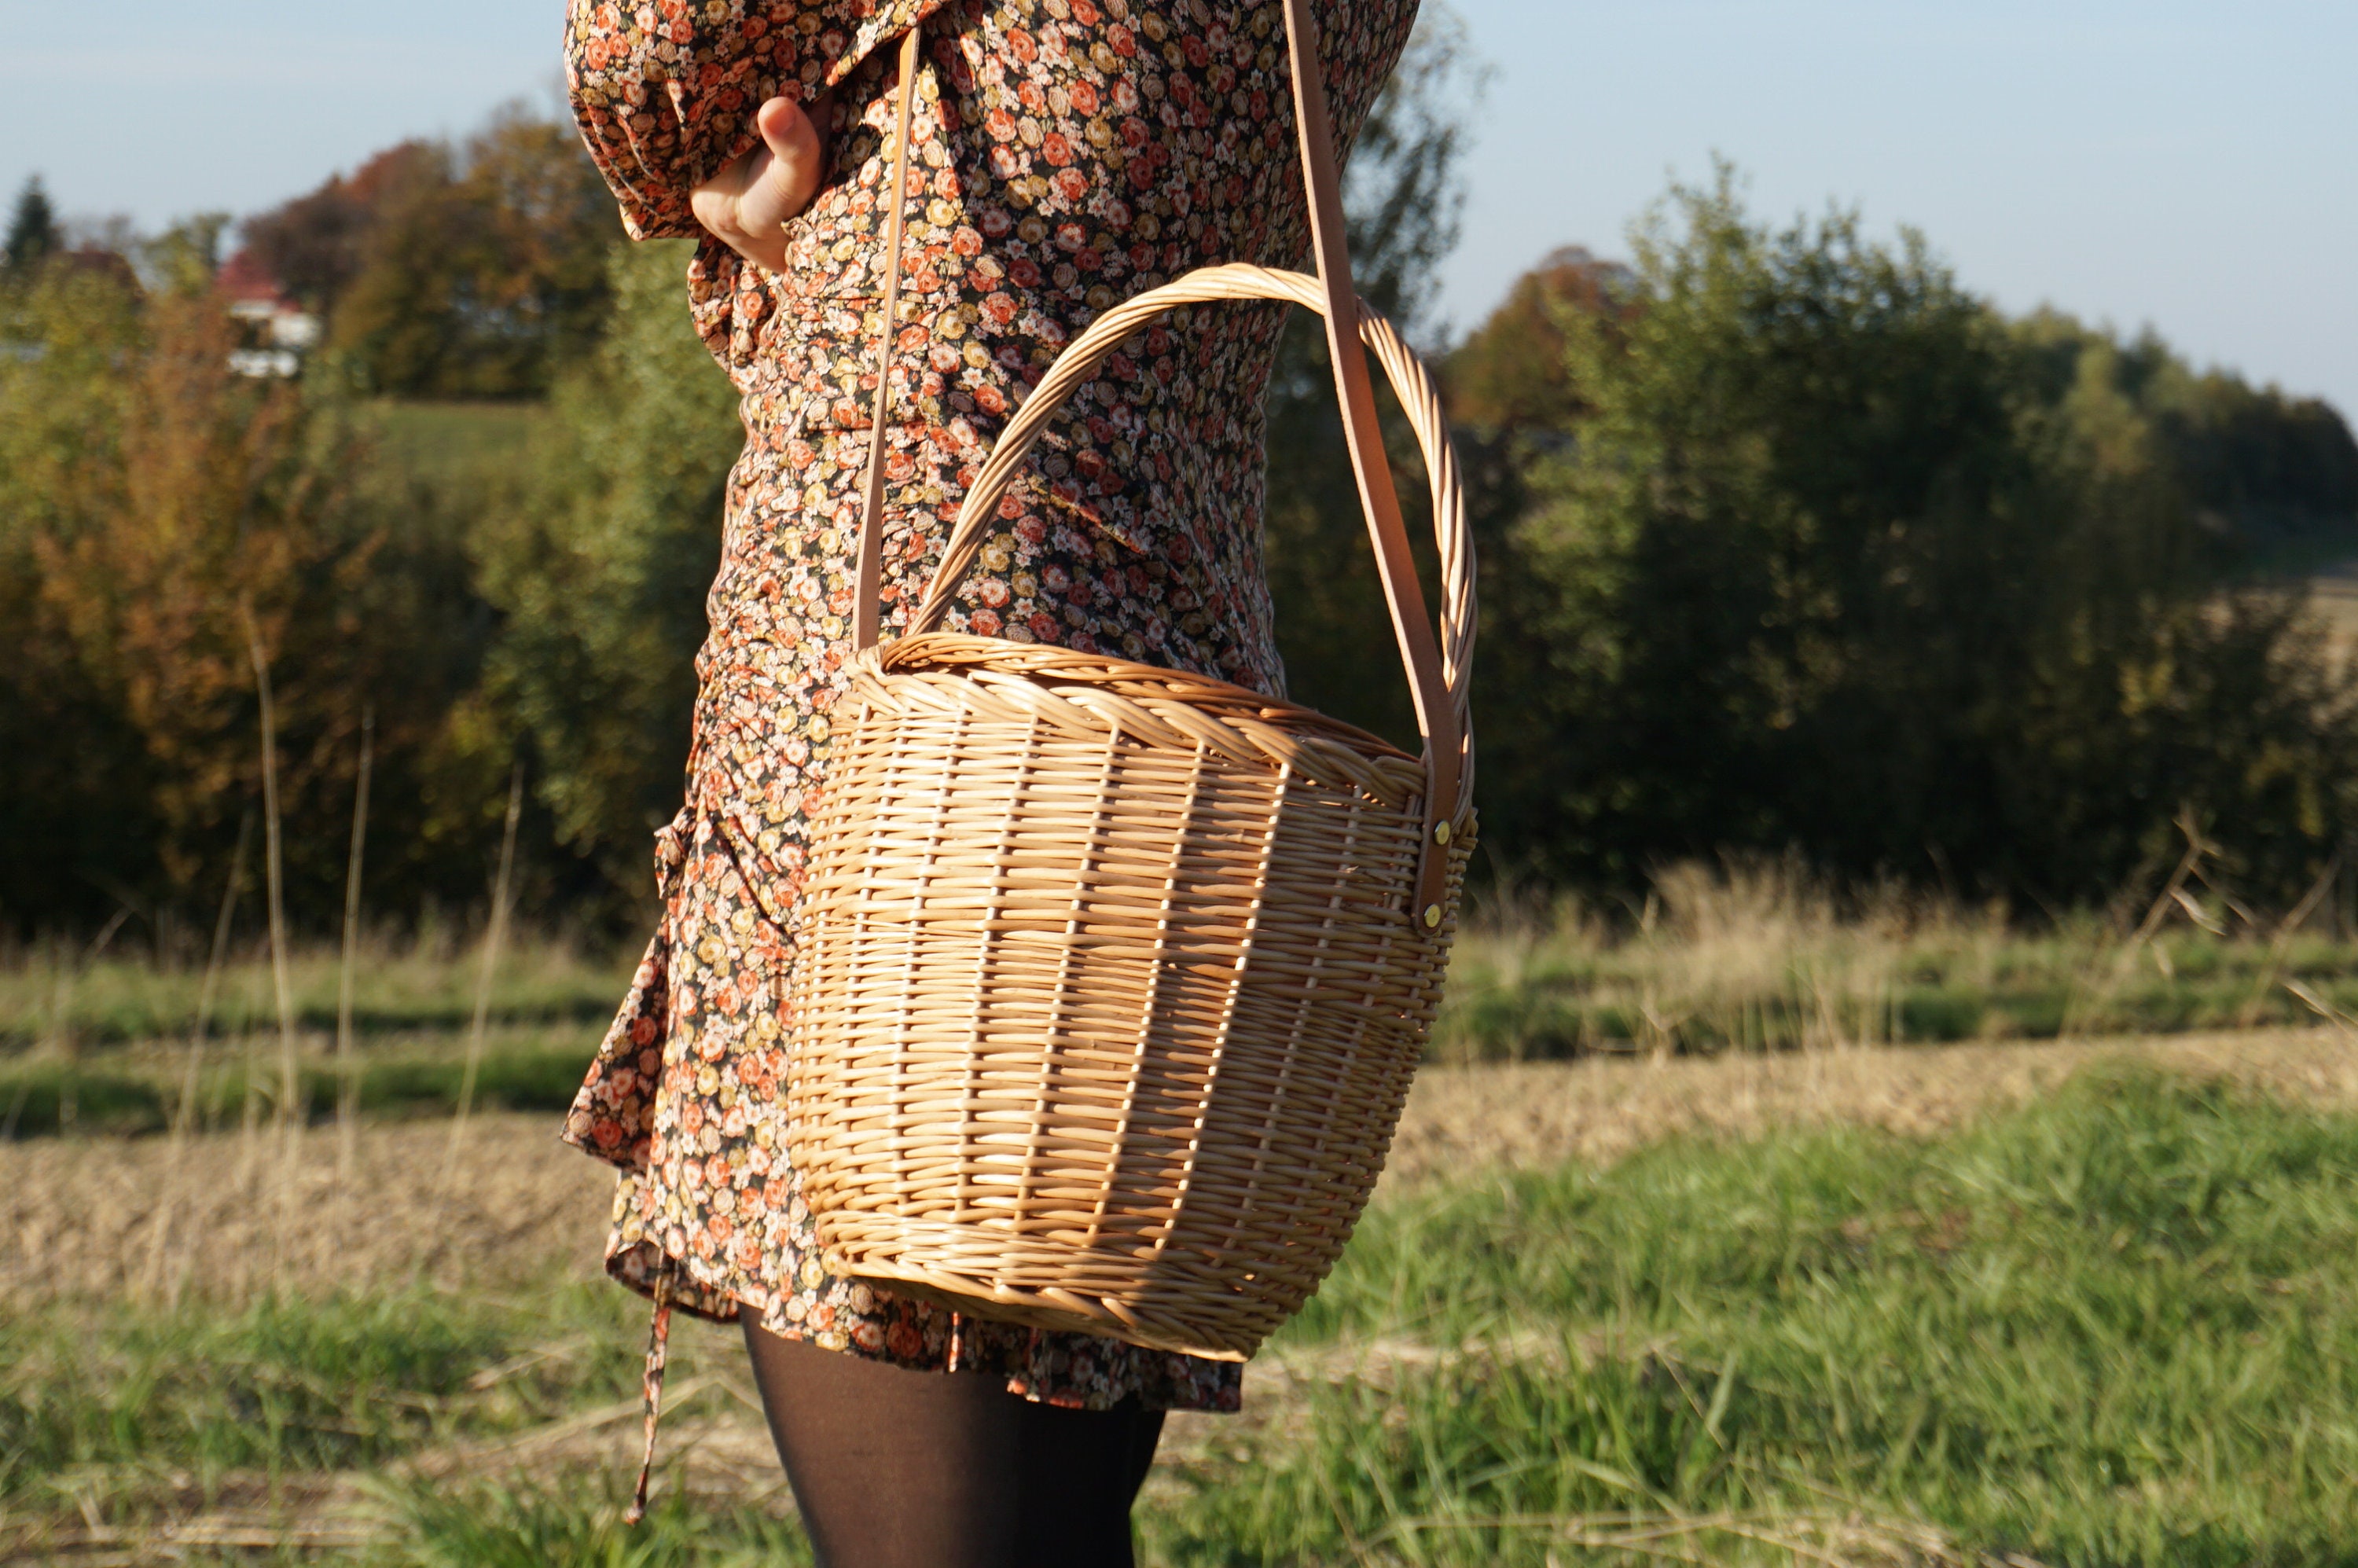 Jane Birkin Basket, Birkin Style Bag,Wicker Bag, Beach Bag, Brikin Basket Handmade with Long Handle, Round Wicker Basket,Round Willow Basket